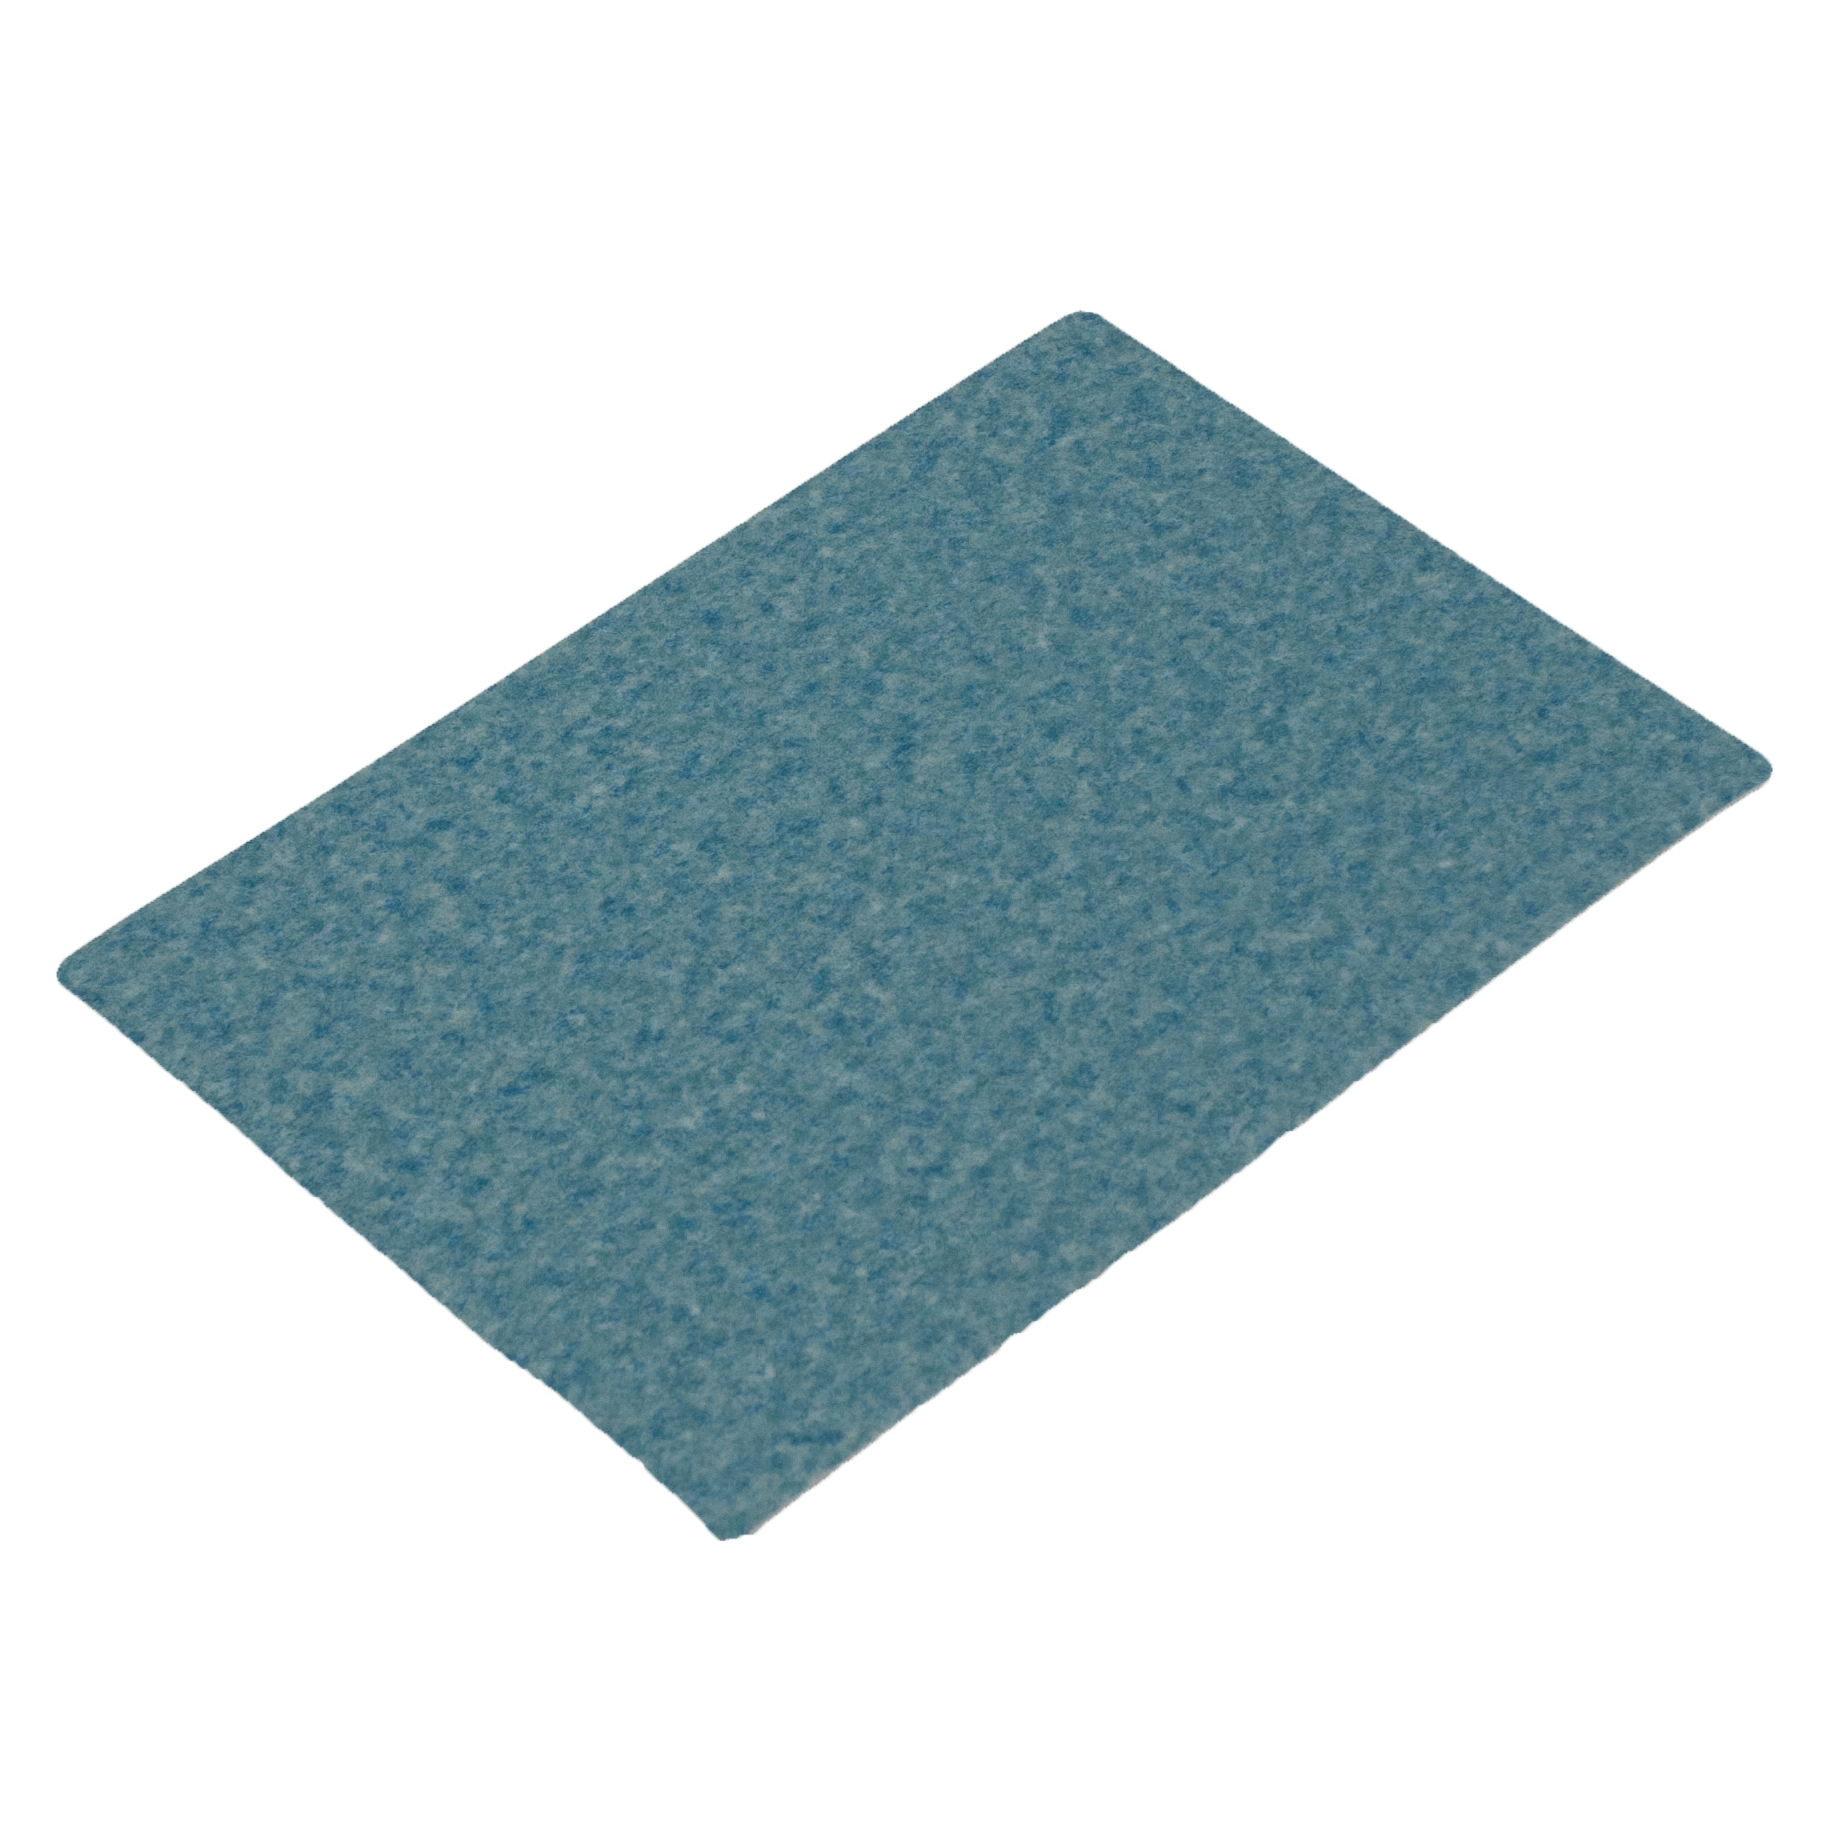 Homogeneous Wear-Resistant PVC Flooring For Garage